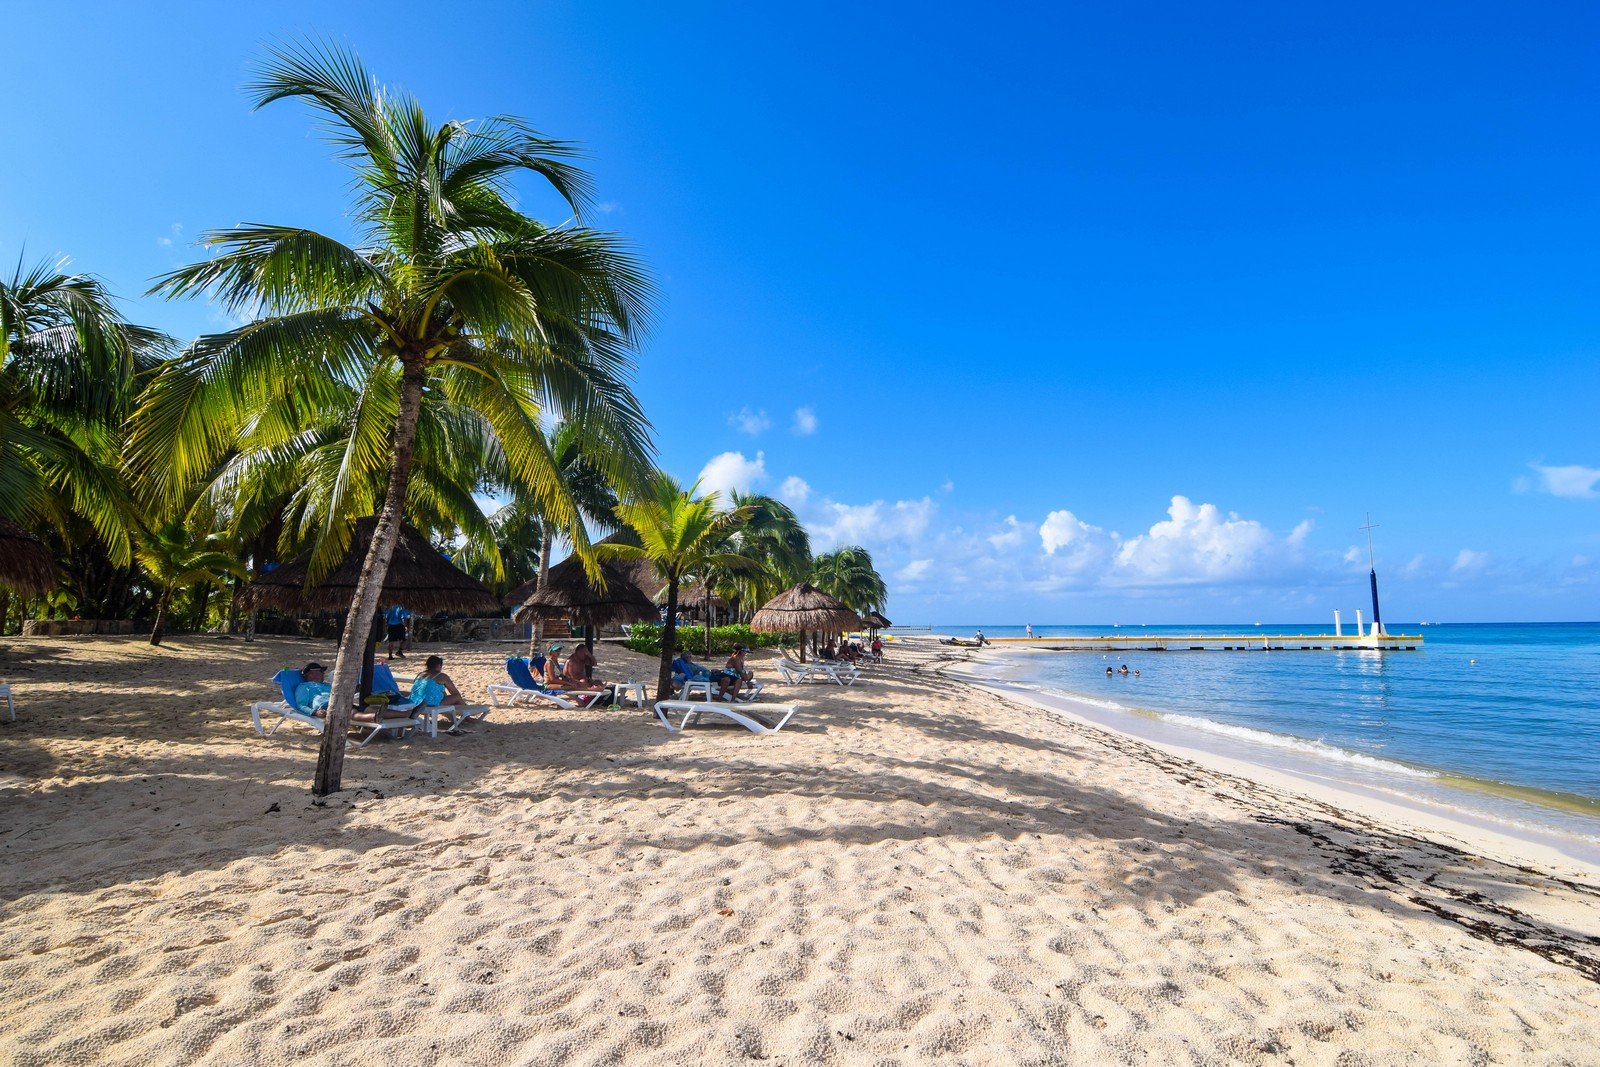 Nachi Cocom 2021 Cozumel excursion review | Royal Caribbean Blog